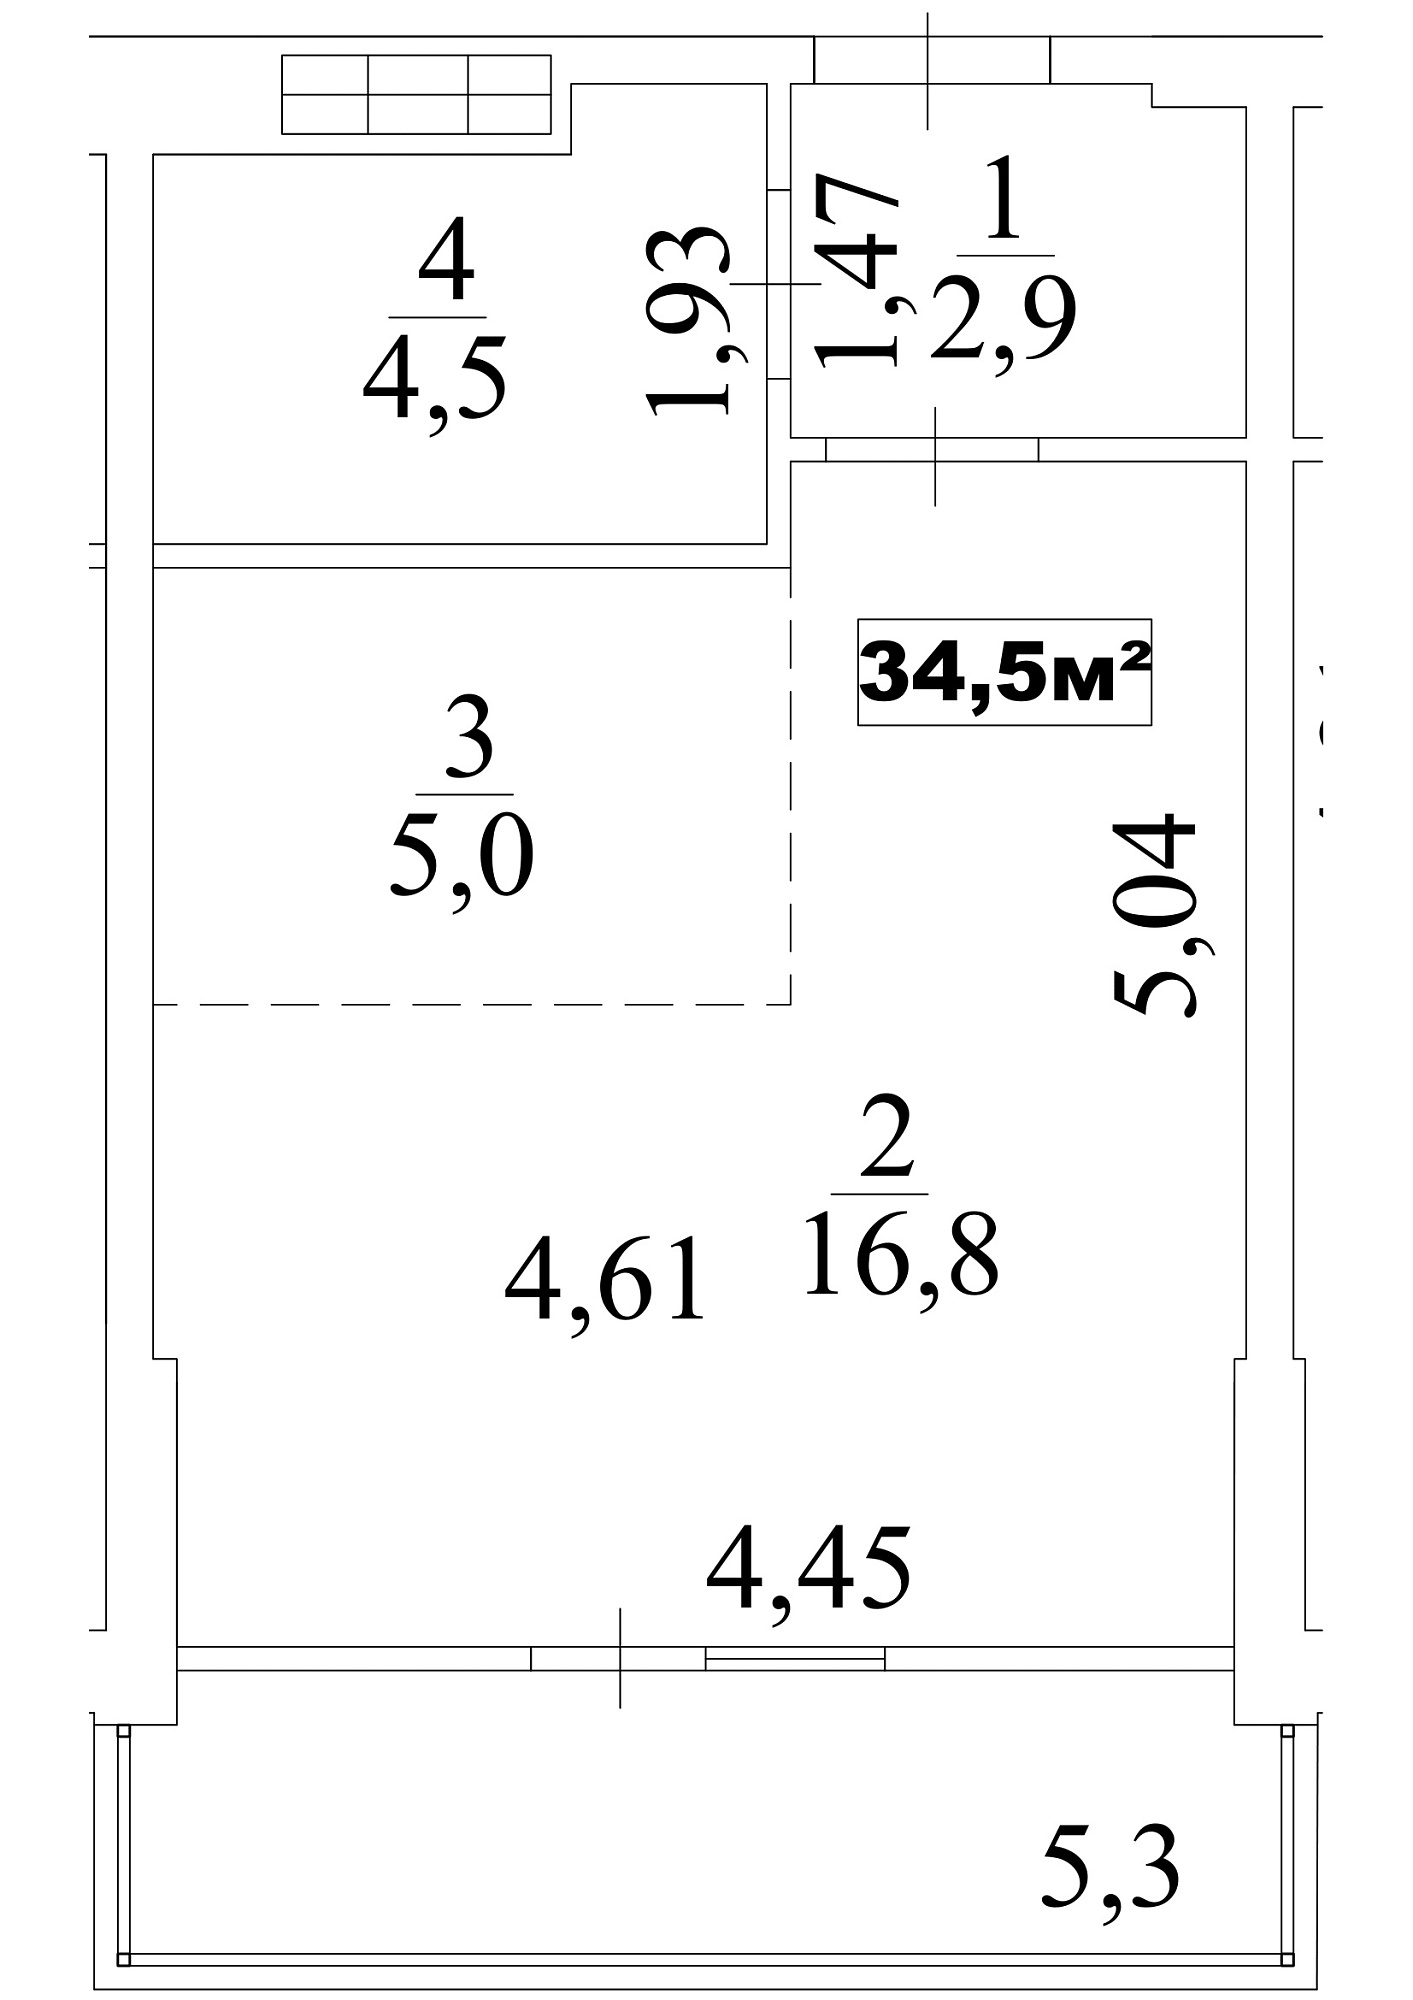 Planning Smart flats area 34.5m2, AB-10-03/0019б.